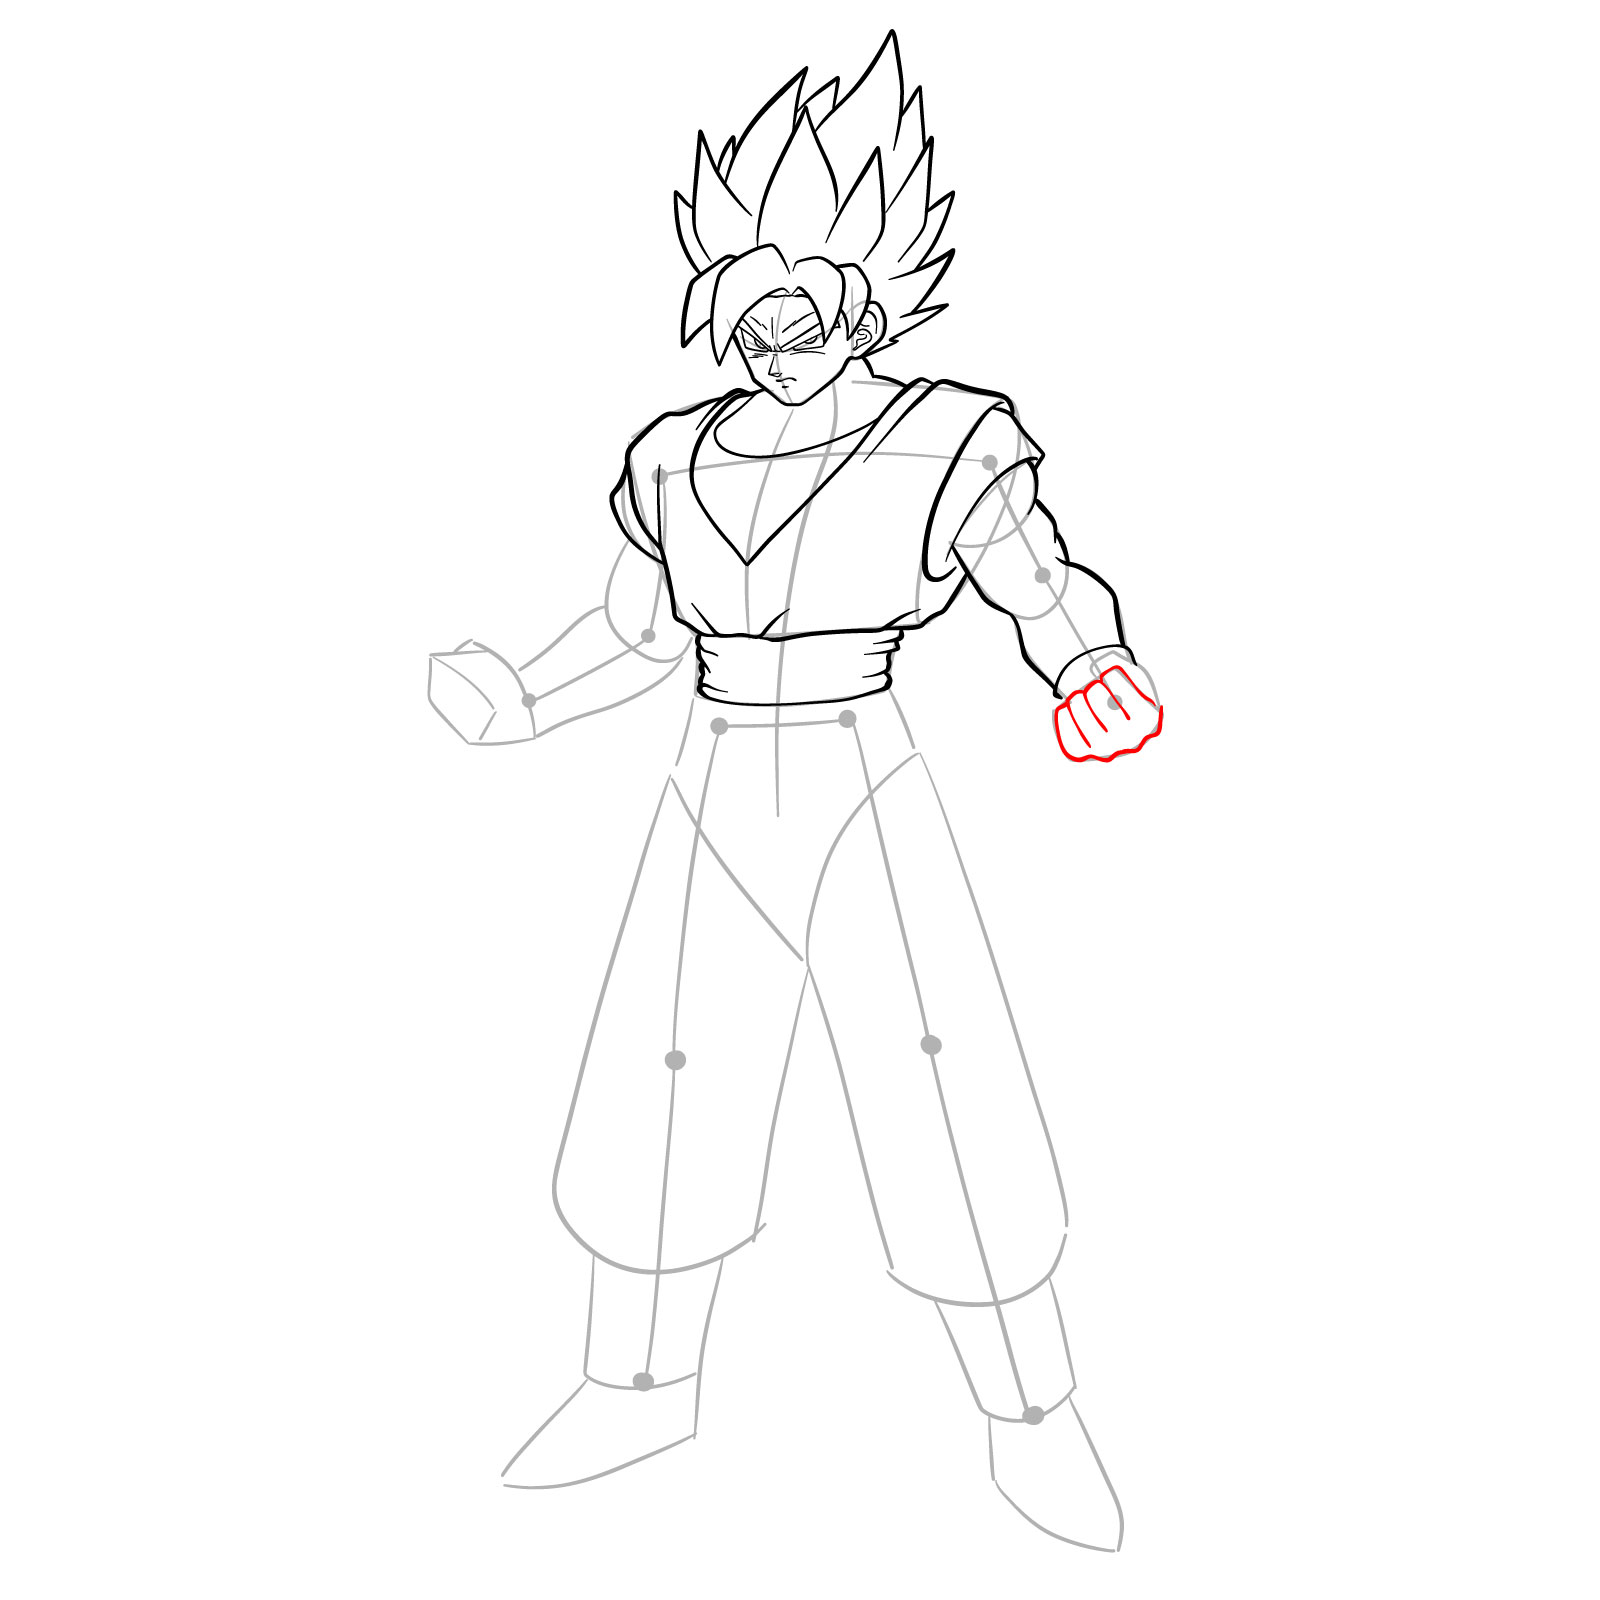 How to draw Goku in Super Saiyan form - step 23